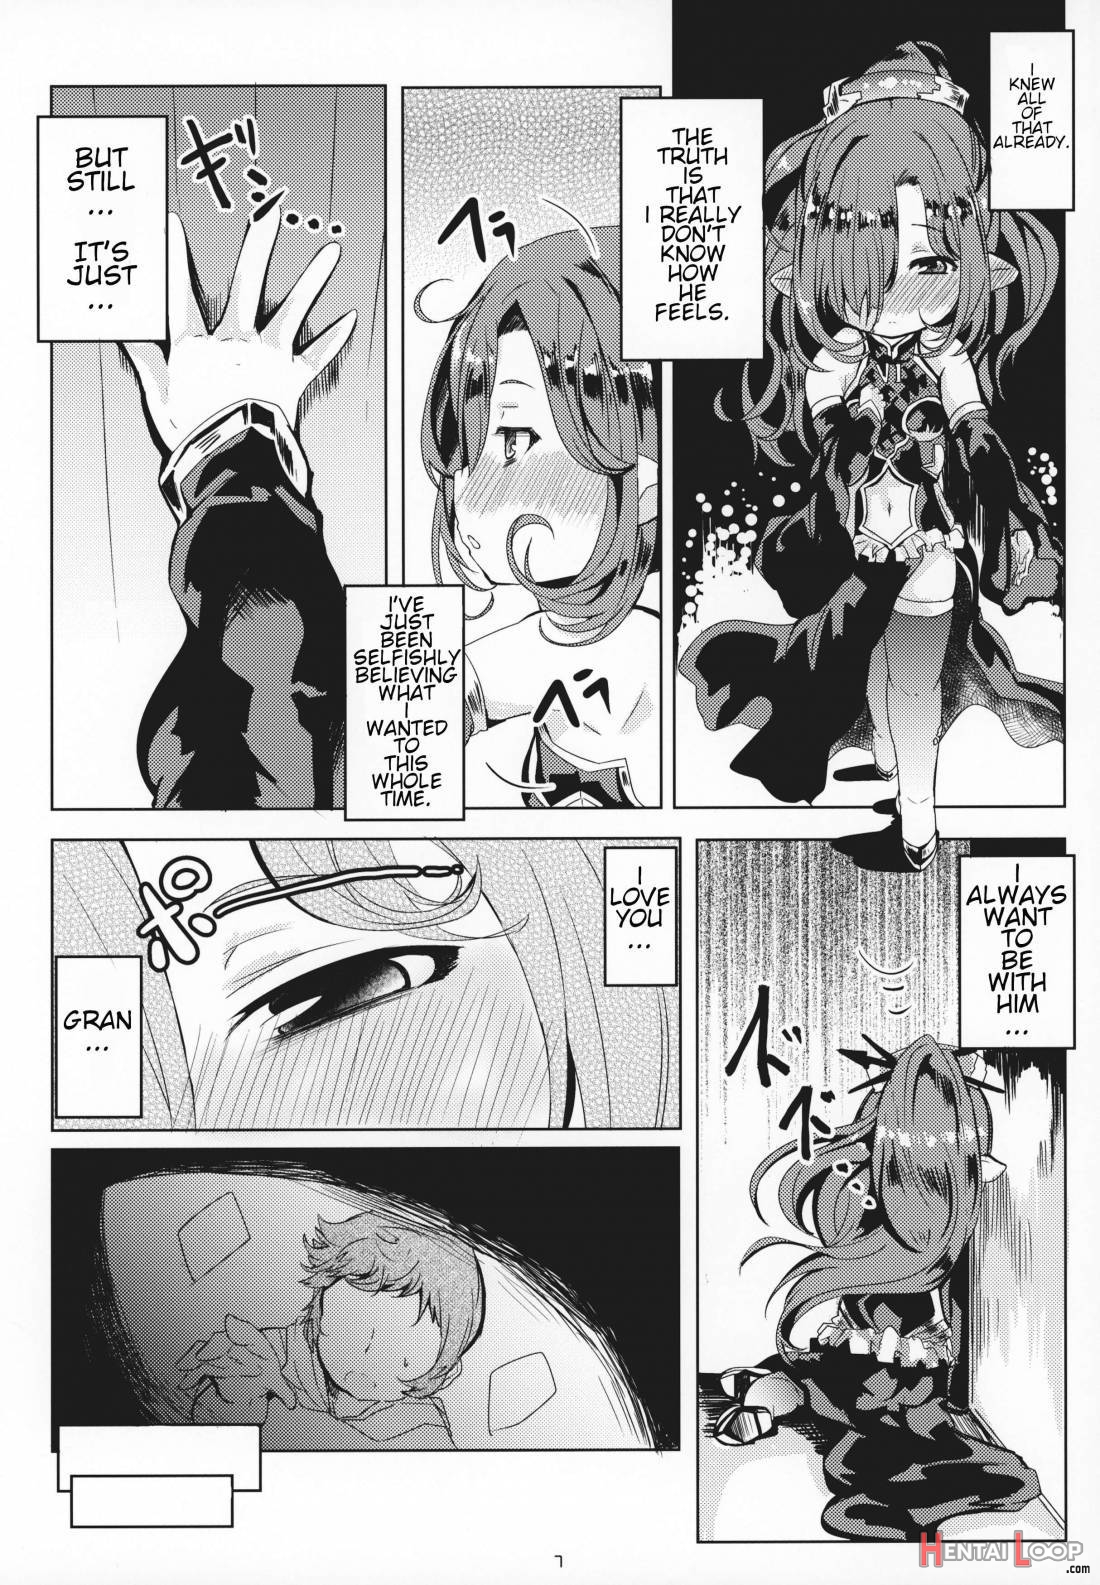 Honto no Kimochi page 6